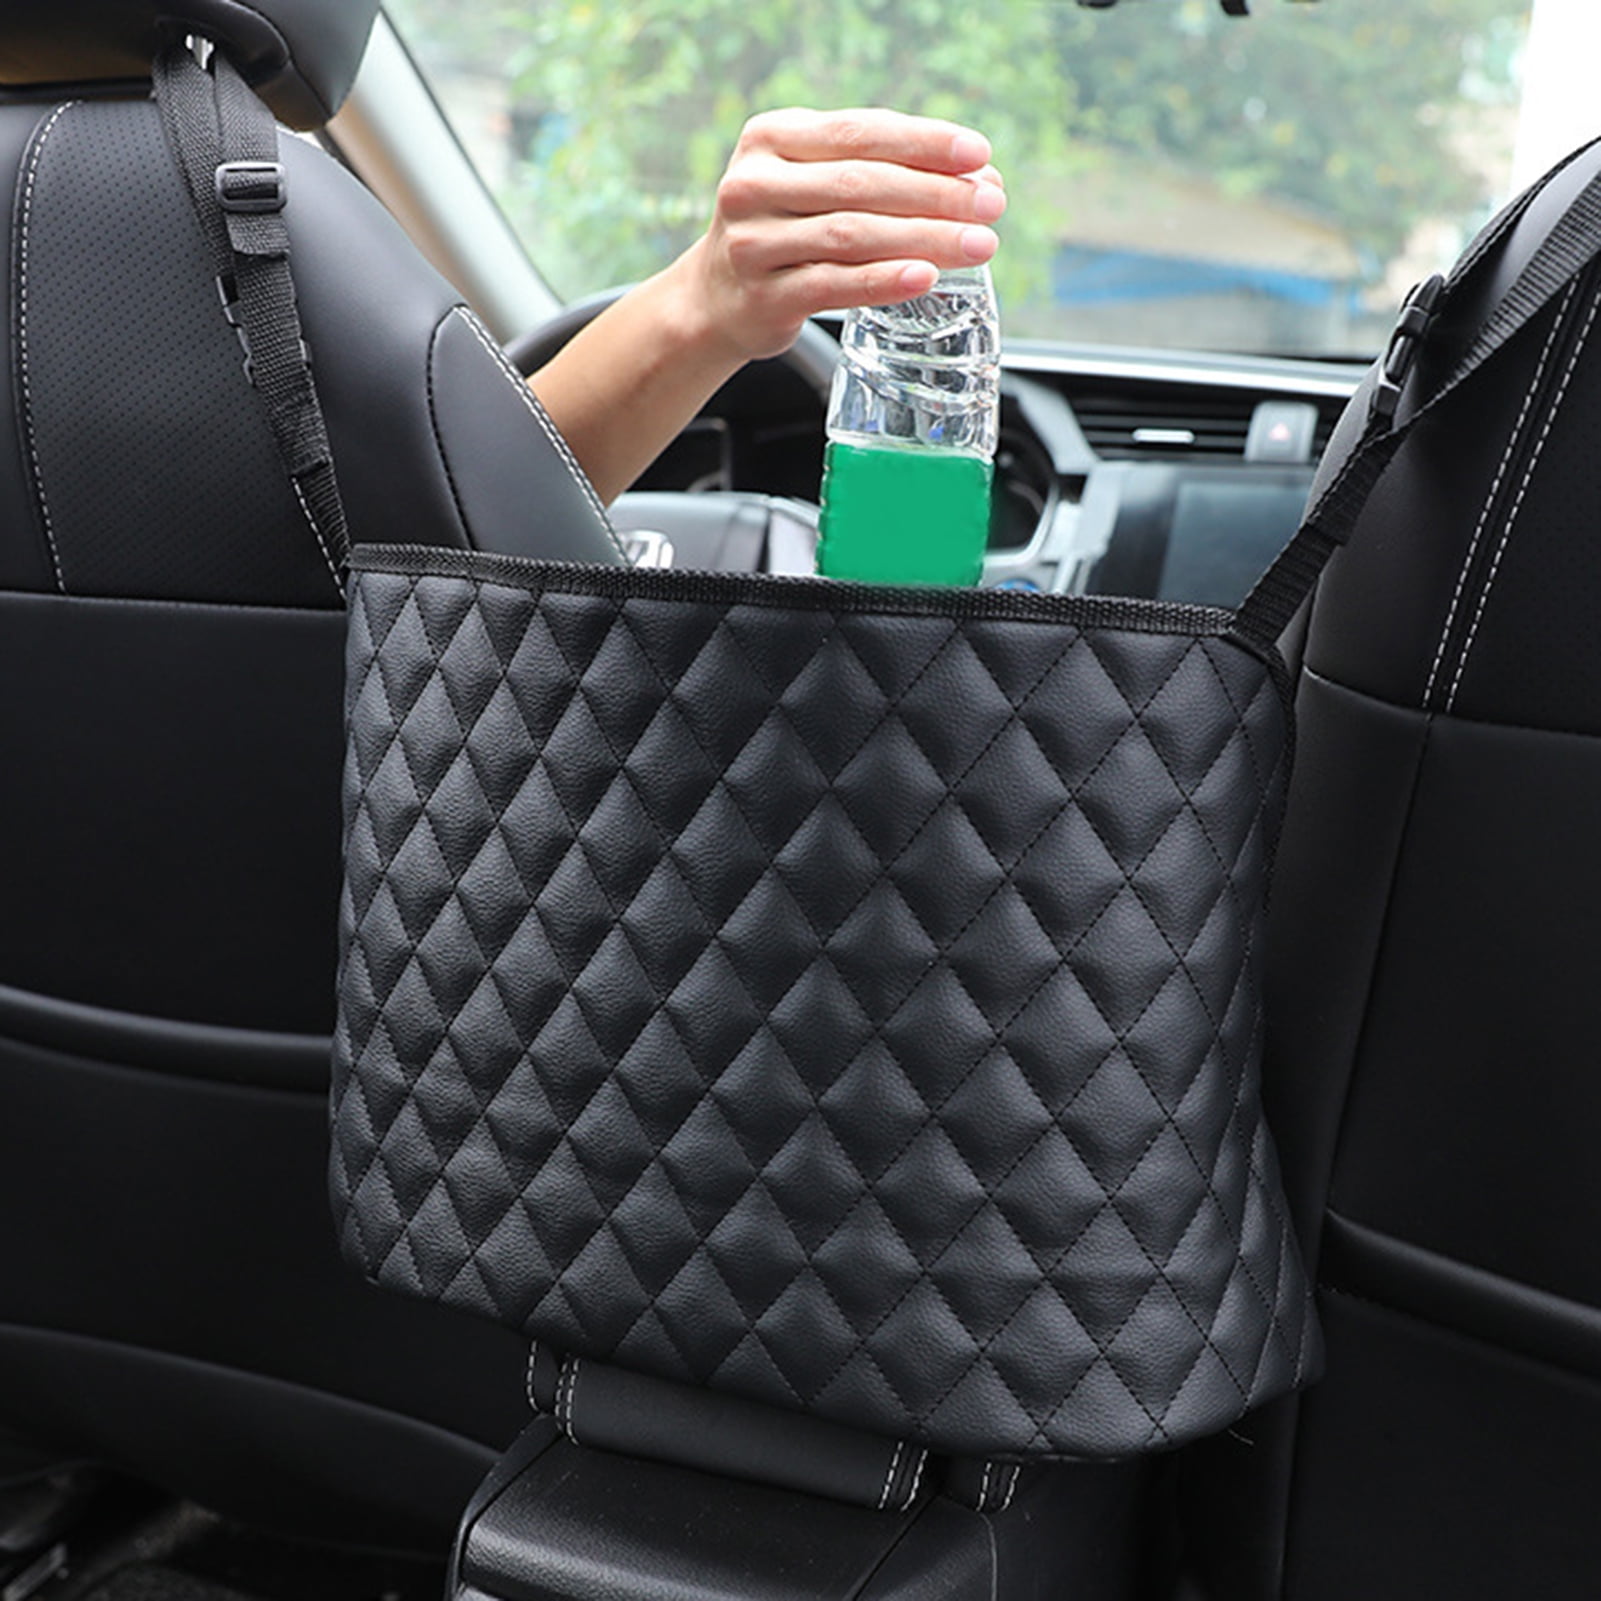 Leather Seat Back Organizer Car Handbag Holder Between Seat Car